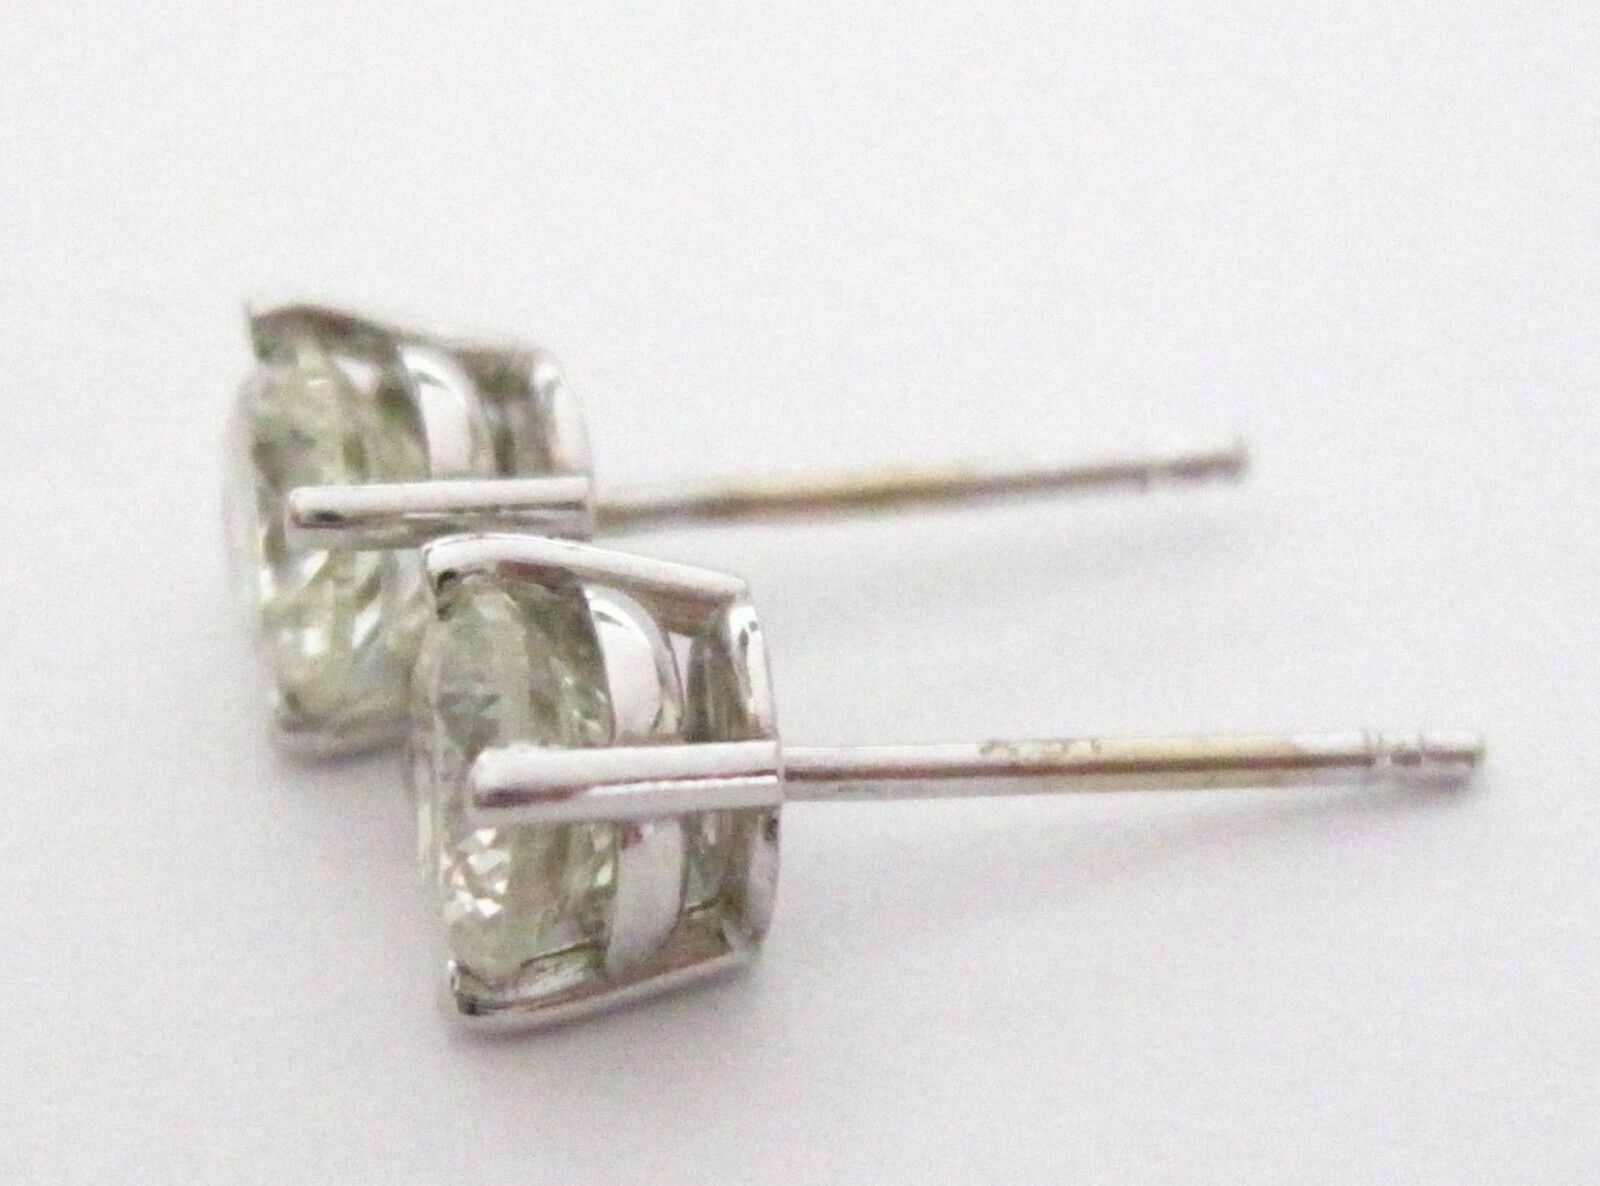 1.16 Carats Round Brilliant Cut Diamond Stud Earrings G-H SI-1 14k White Gold